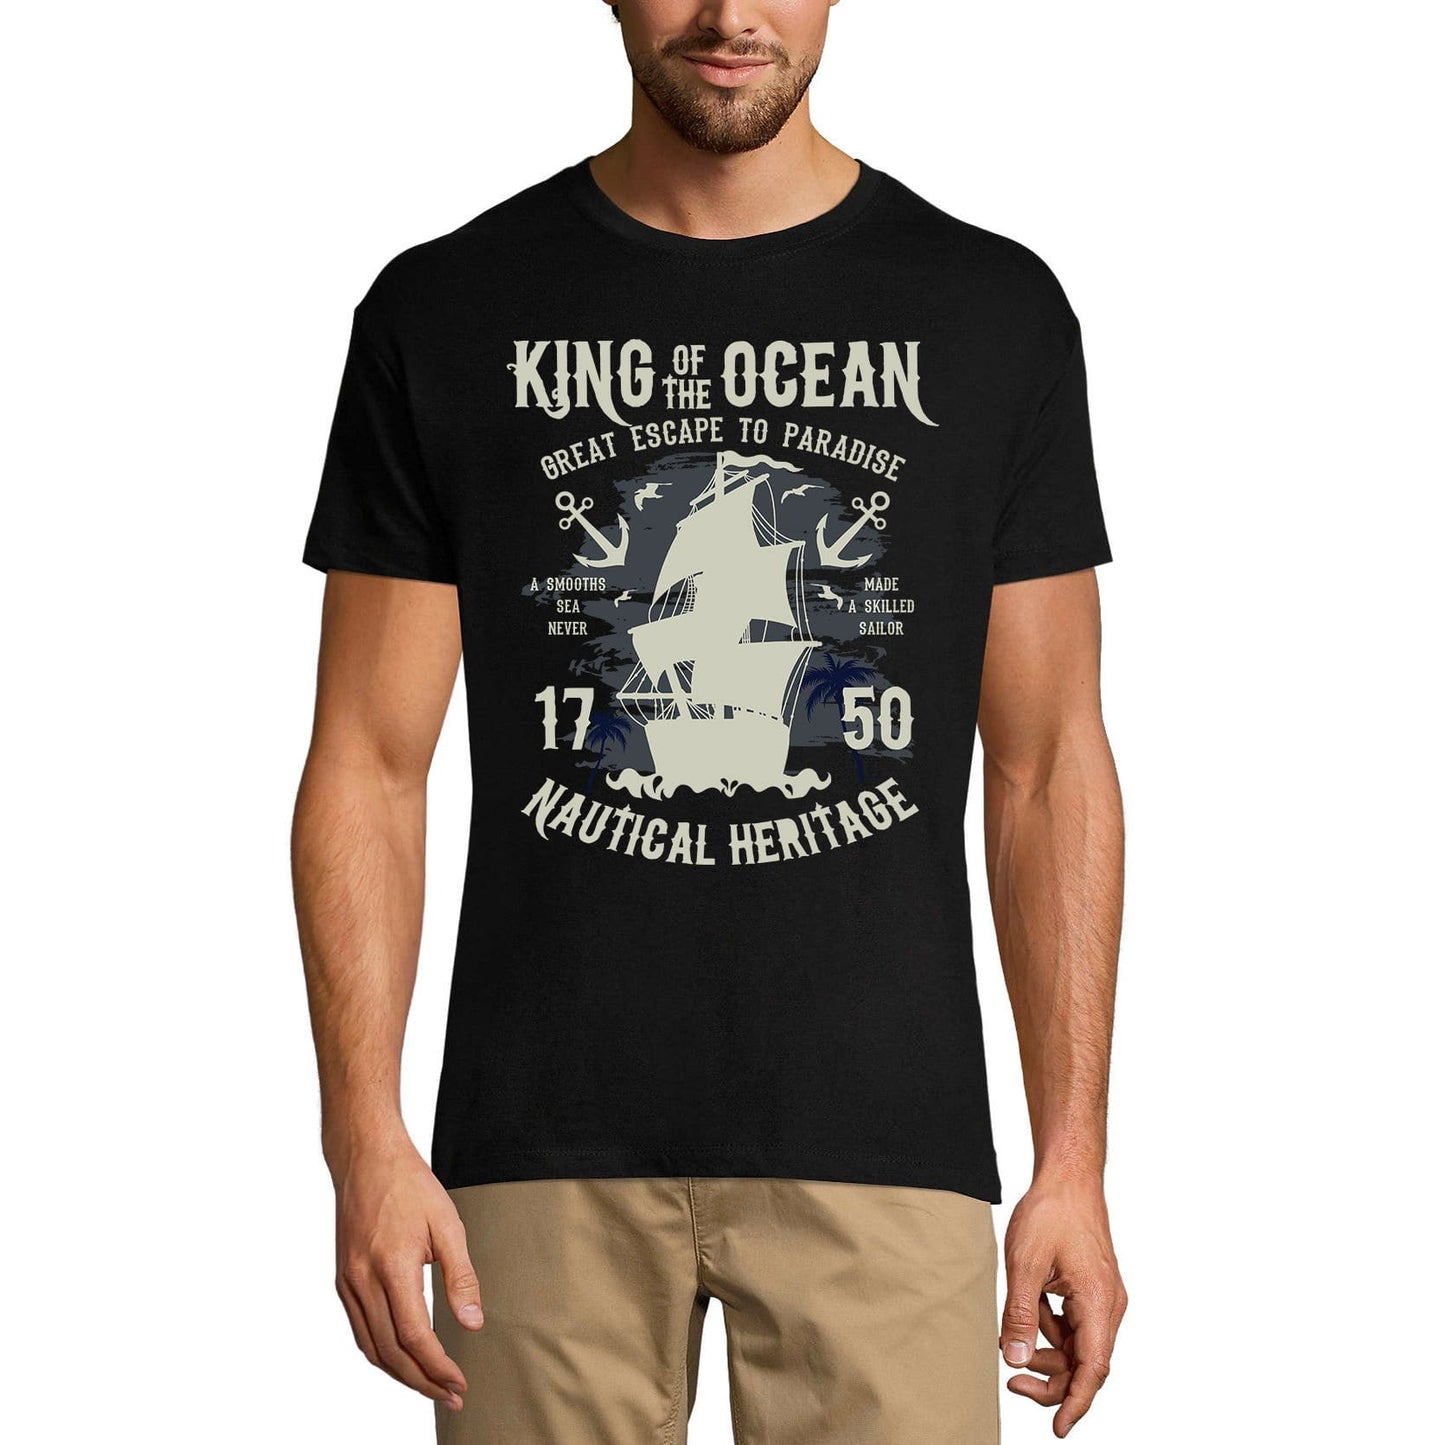 ULTRABASIC Men's T-Shirt King of the Ocean - 1750 Nautical Heritage - Sailor Tee Shirt